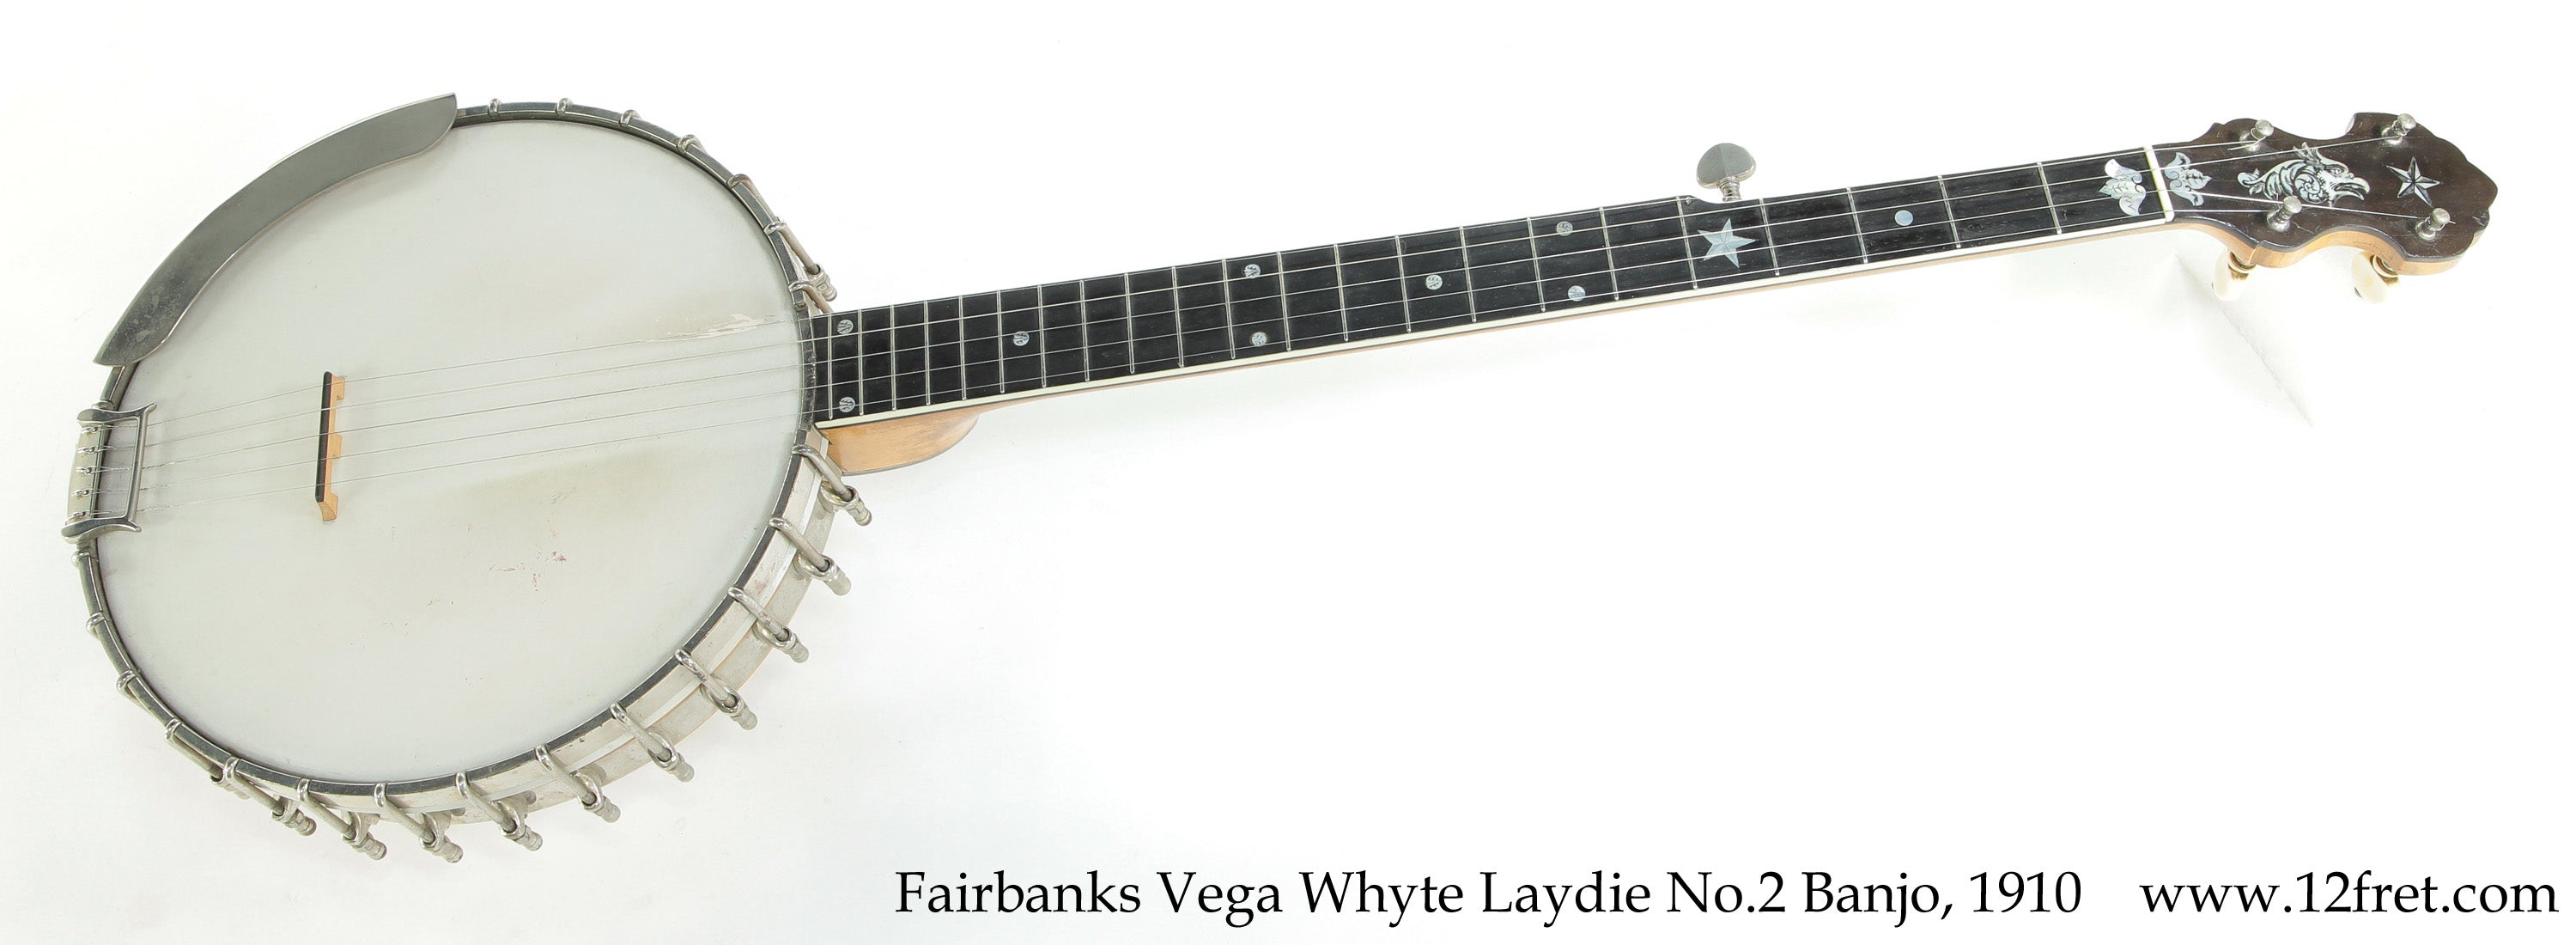 Fairbanks Vega Whyte Laydie No.2 Banjo, 1910 - The Twelfth Fret